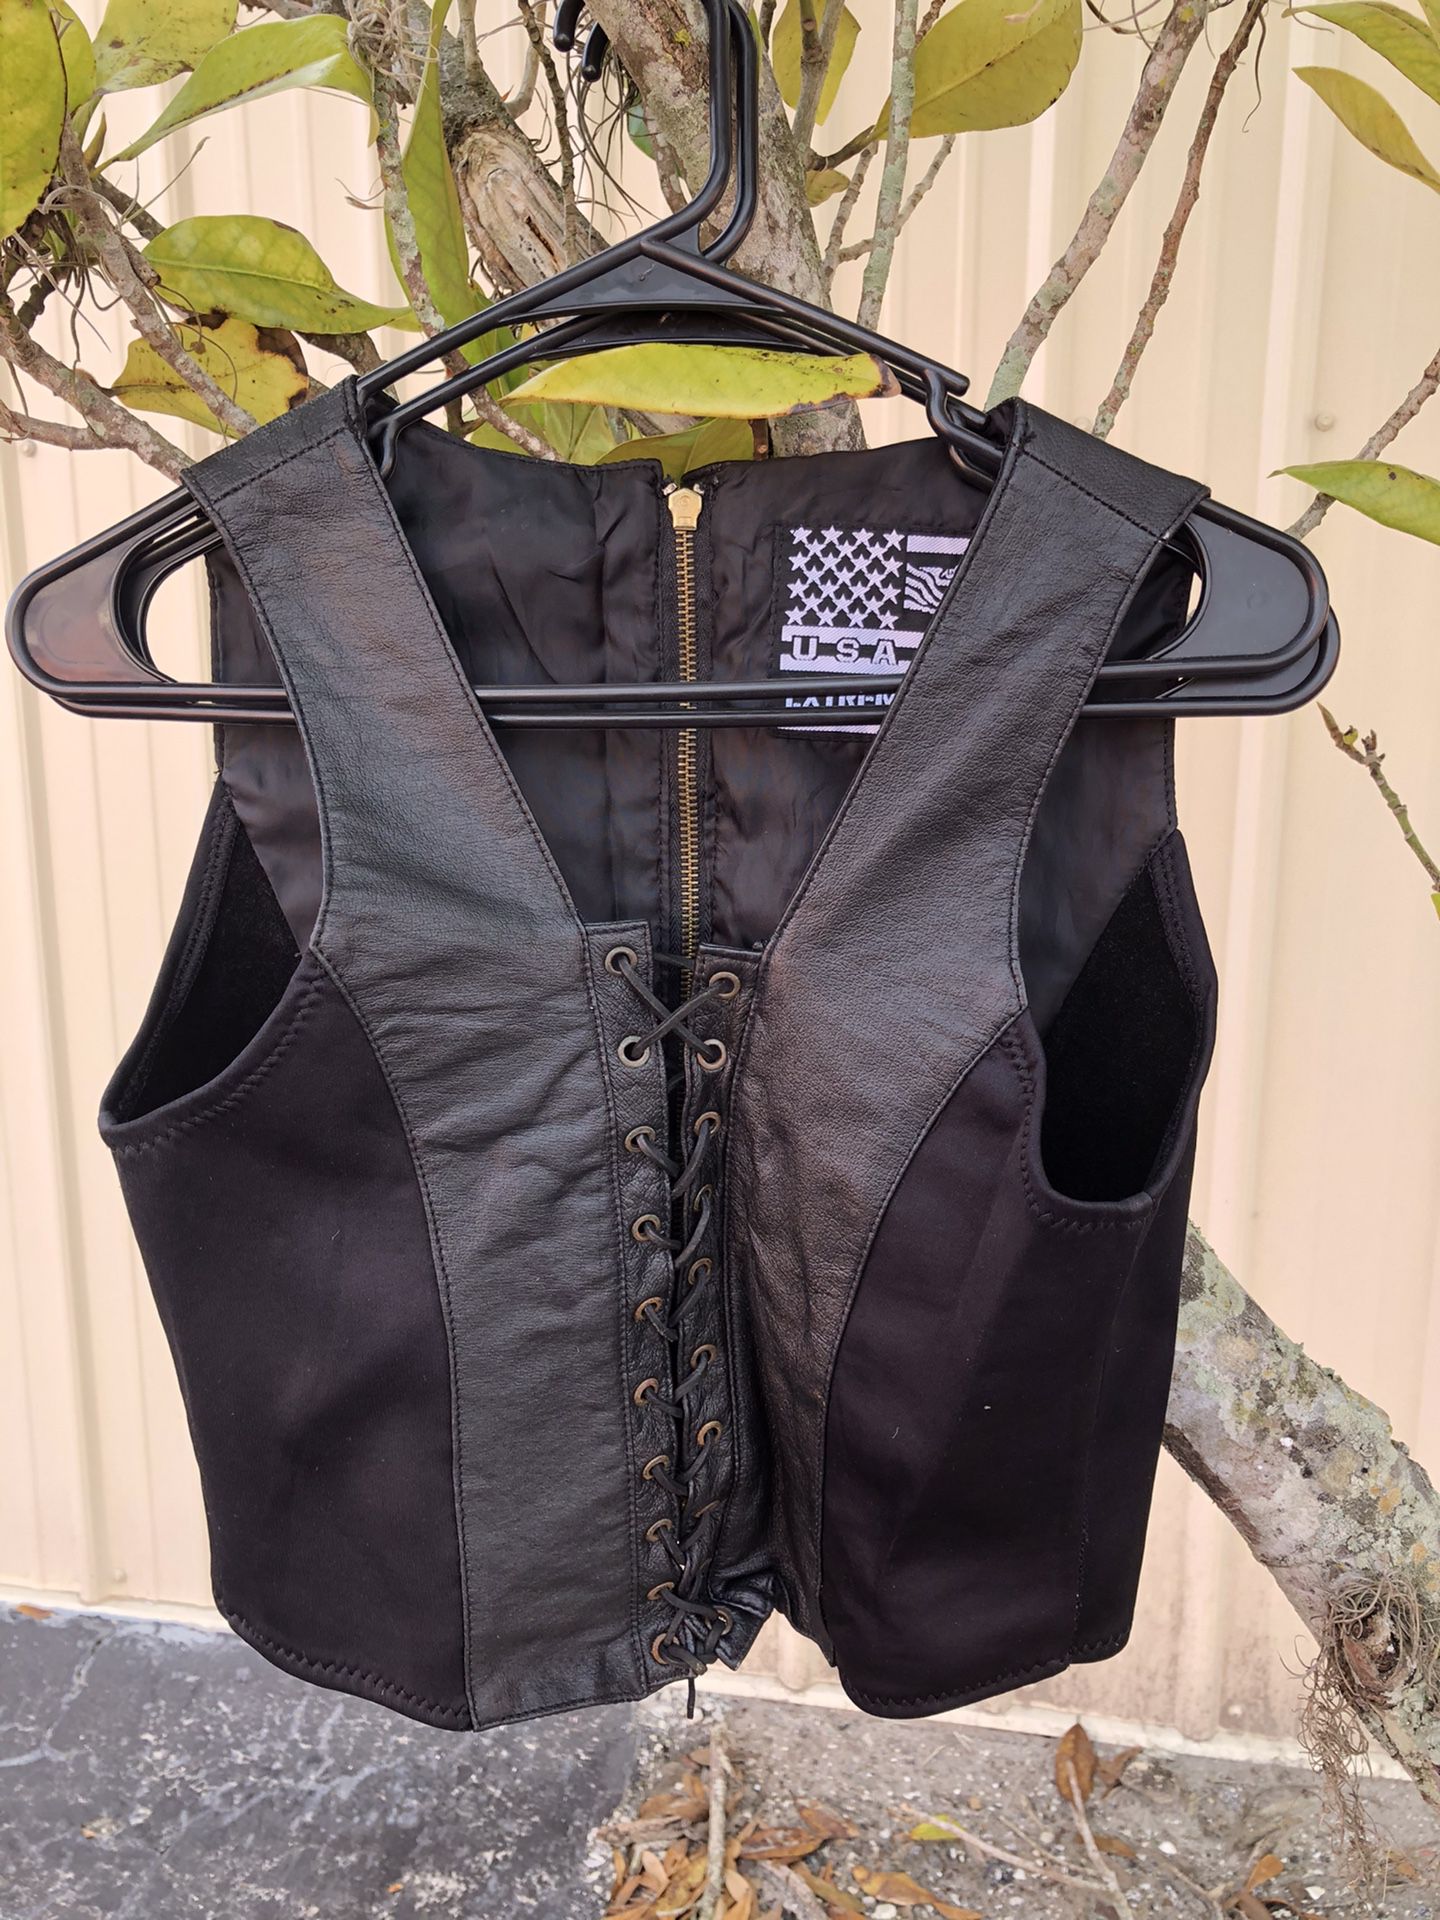 Women’s motorcycle leather vest